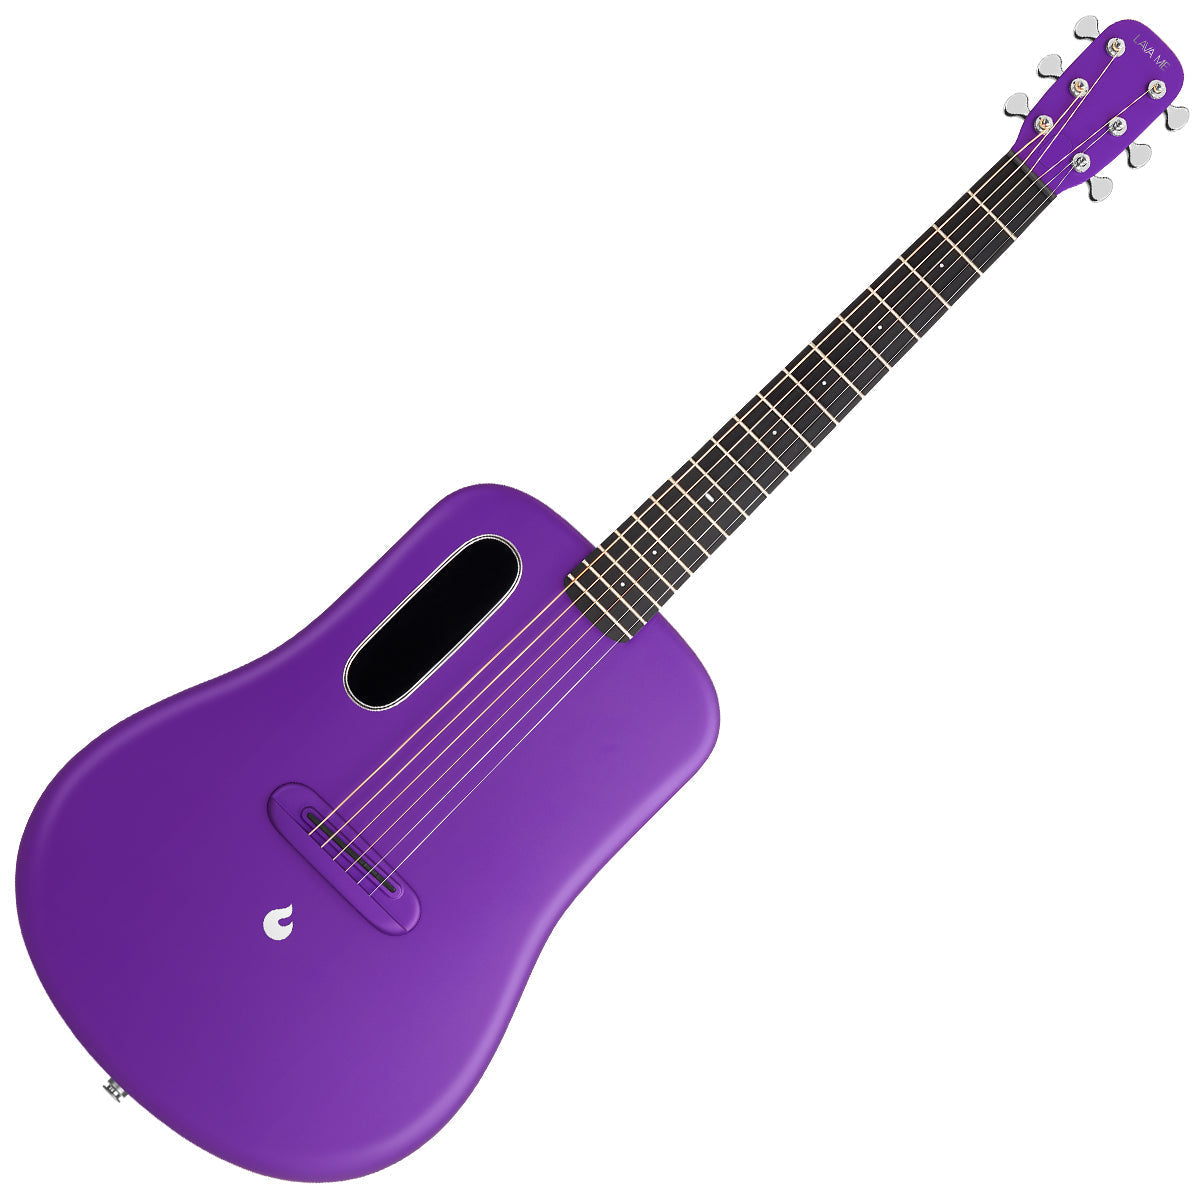 LAVA ME4 Carbon 36" with Space Bag ~ Purple, Acoustic Guitar for sale at Richards Guitars.